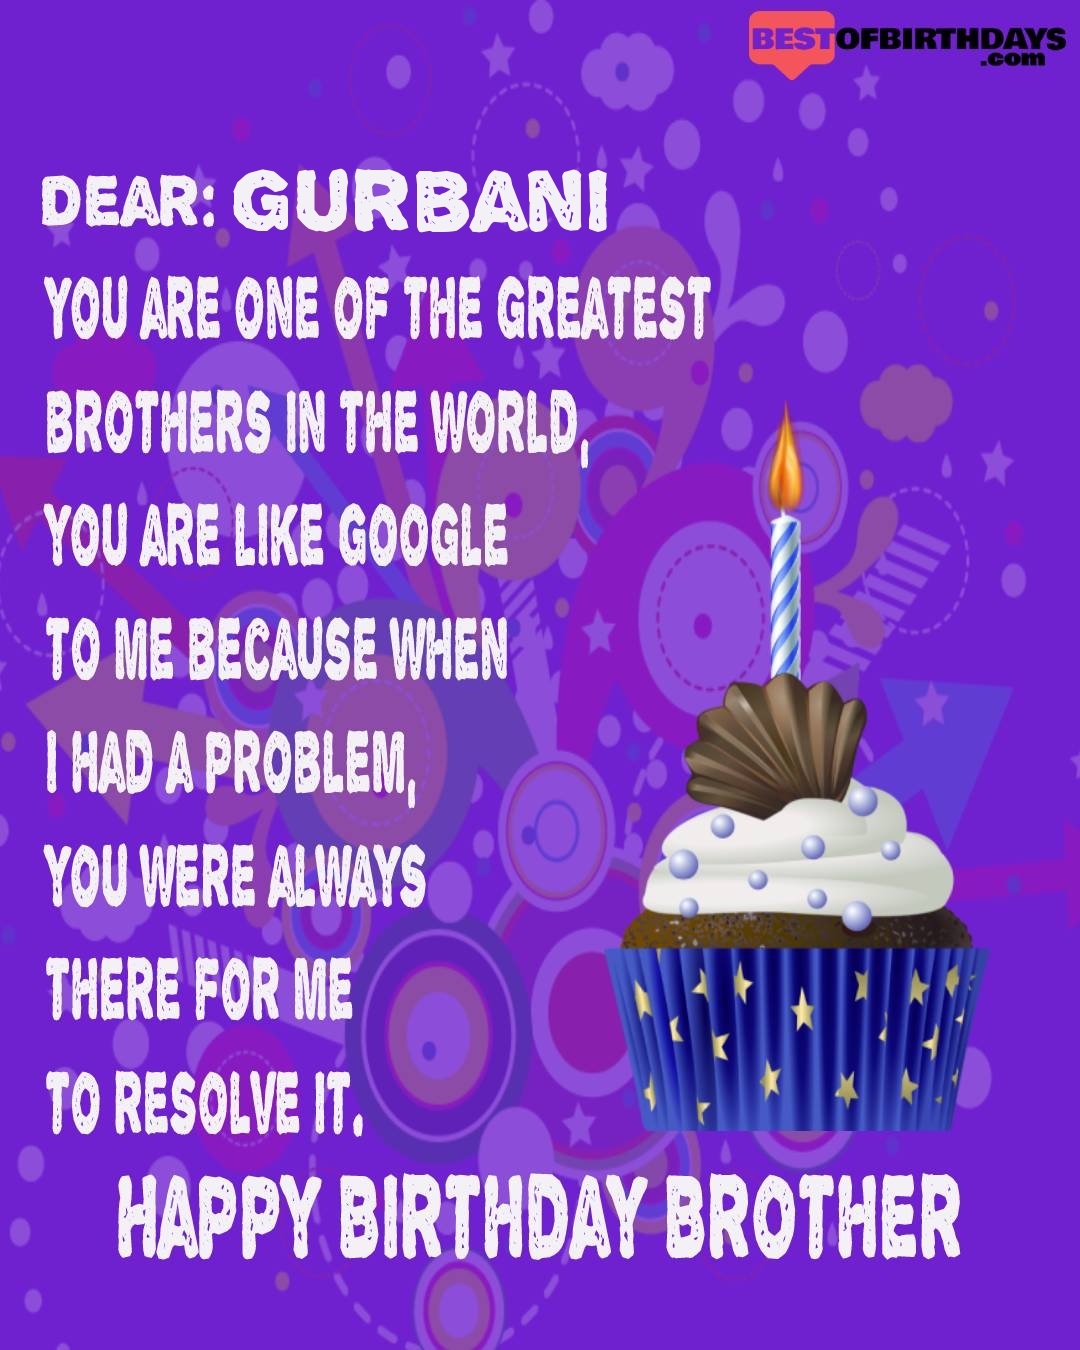 Happy birthday gurbani bhai brother bro